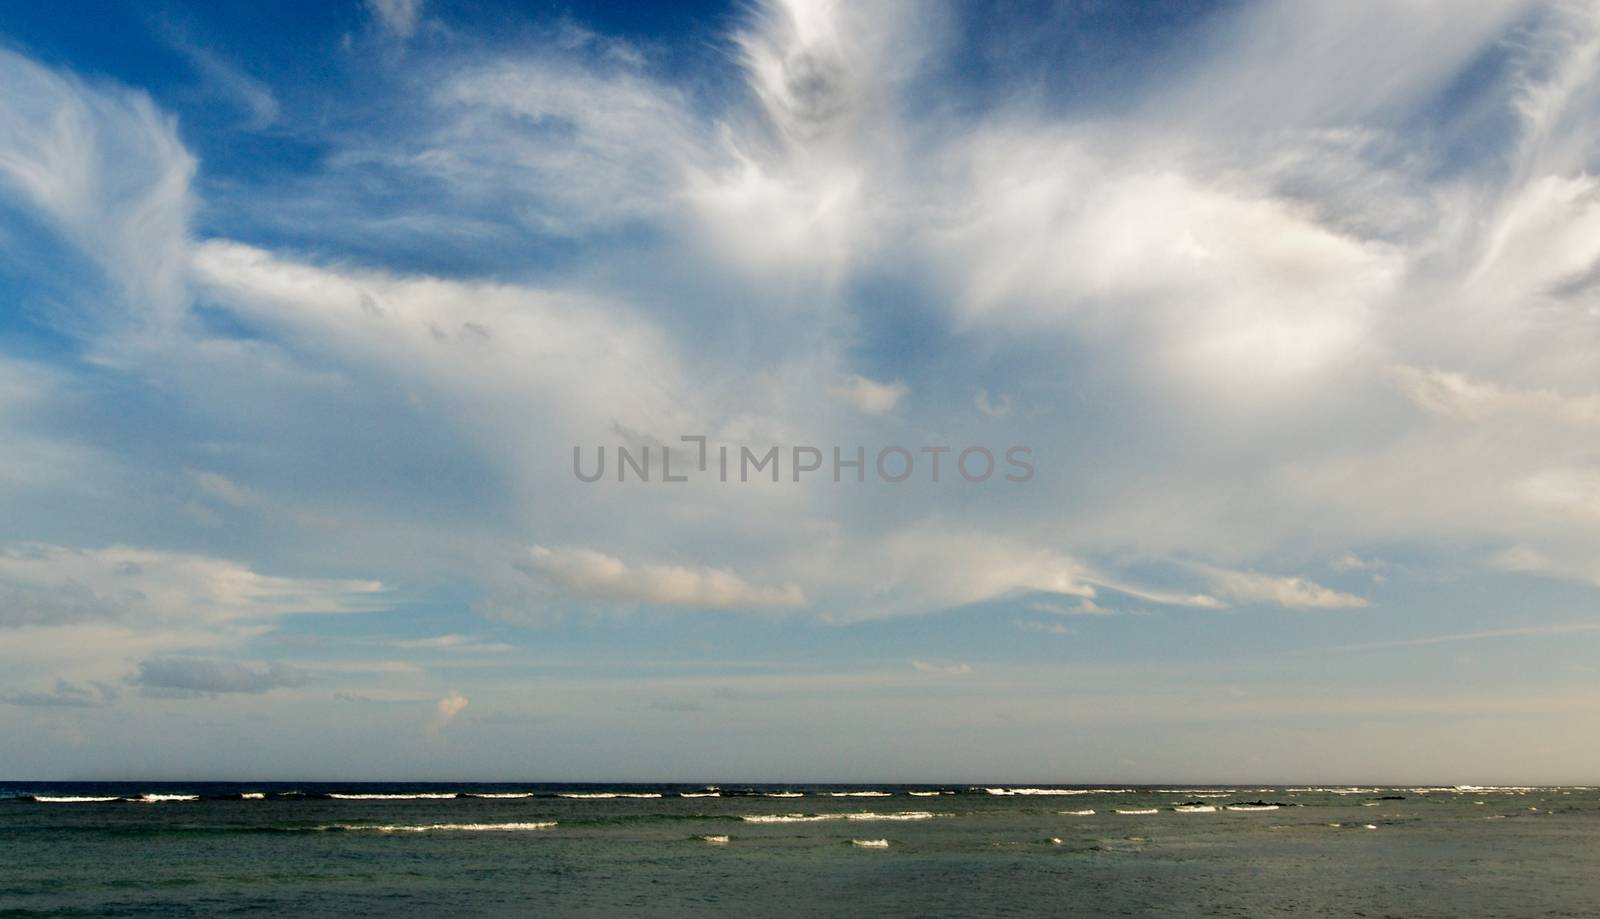 Beauty Fleecy Clouds on Summer Blue Sky under Indian Ocean Horizon Outdoors